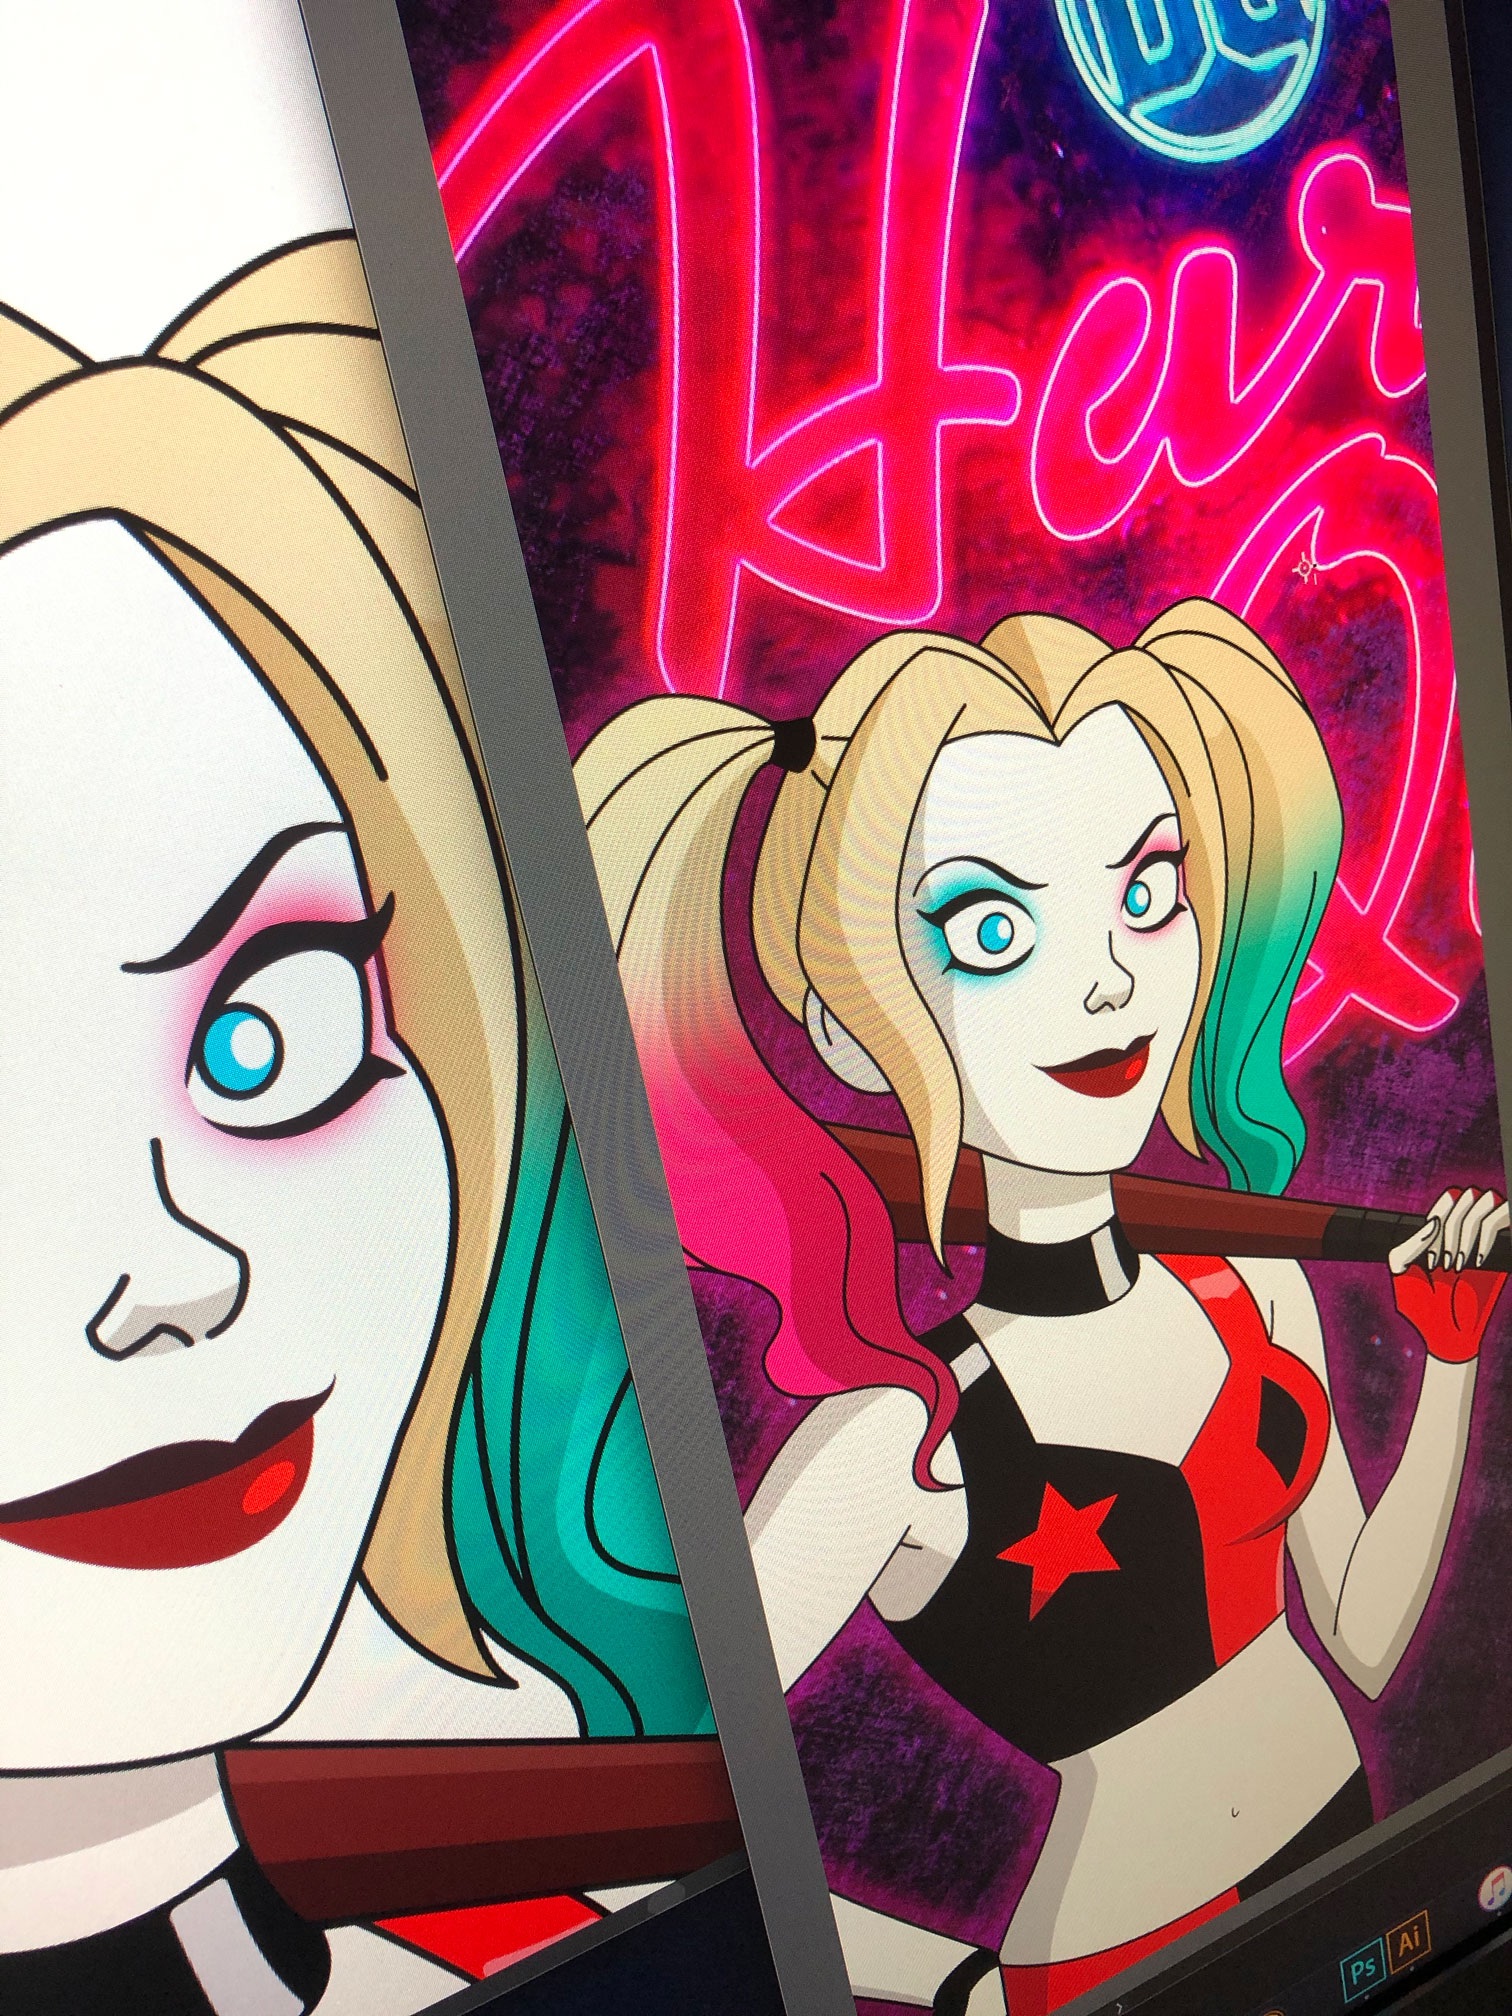 New Harley Quinn 2020 Art Wallpapers